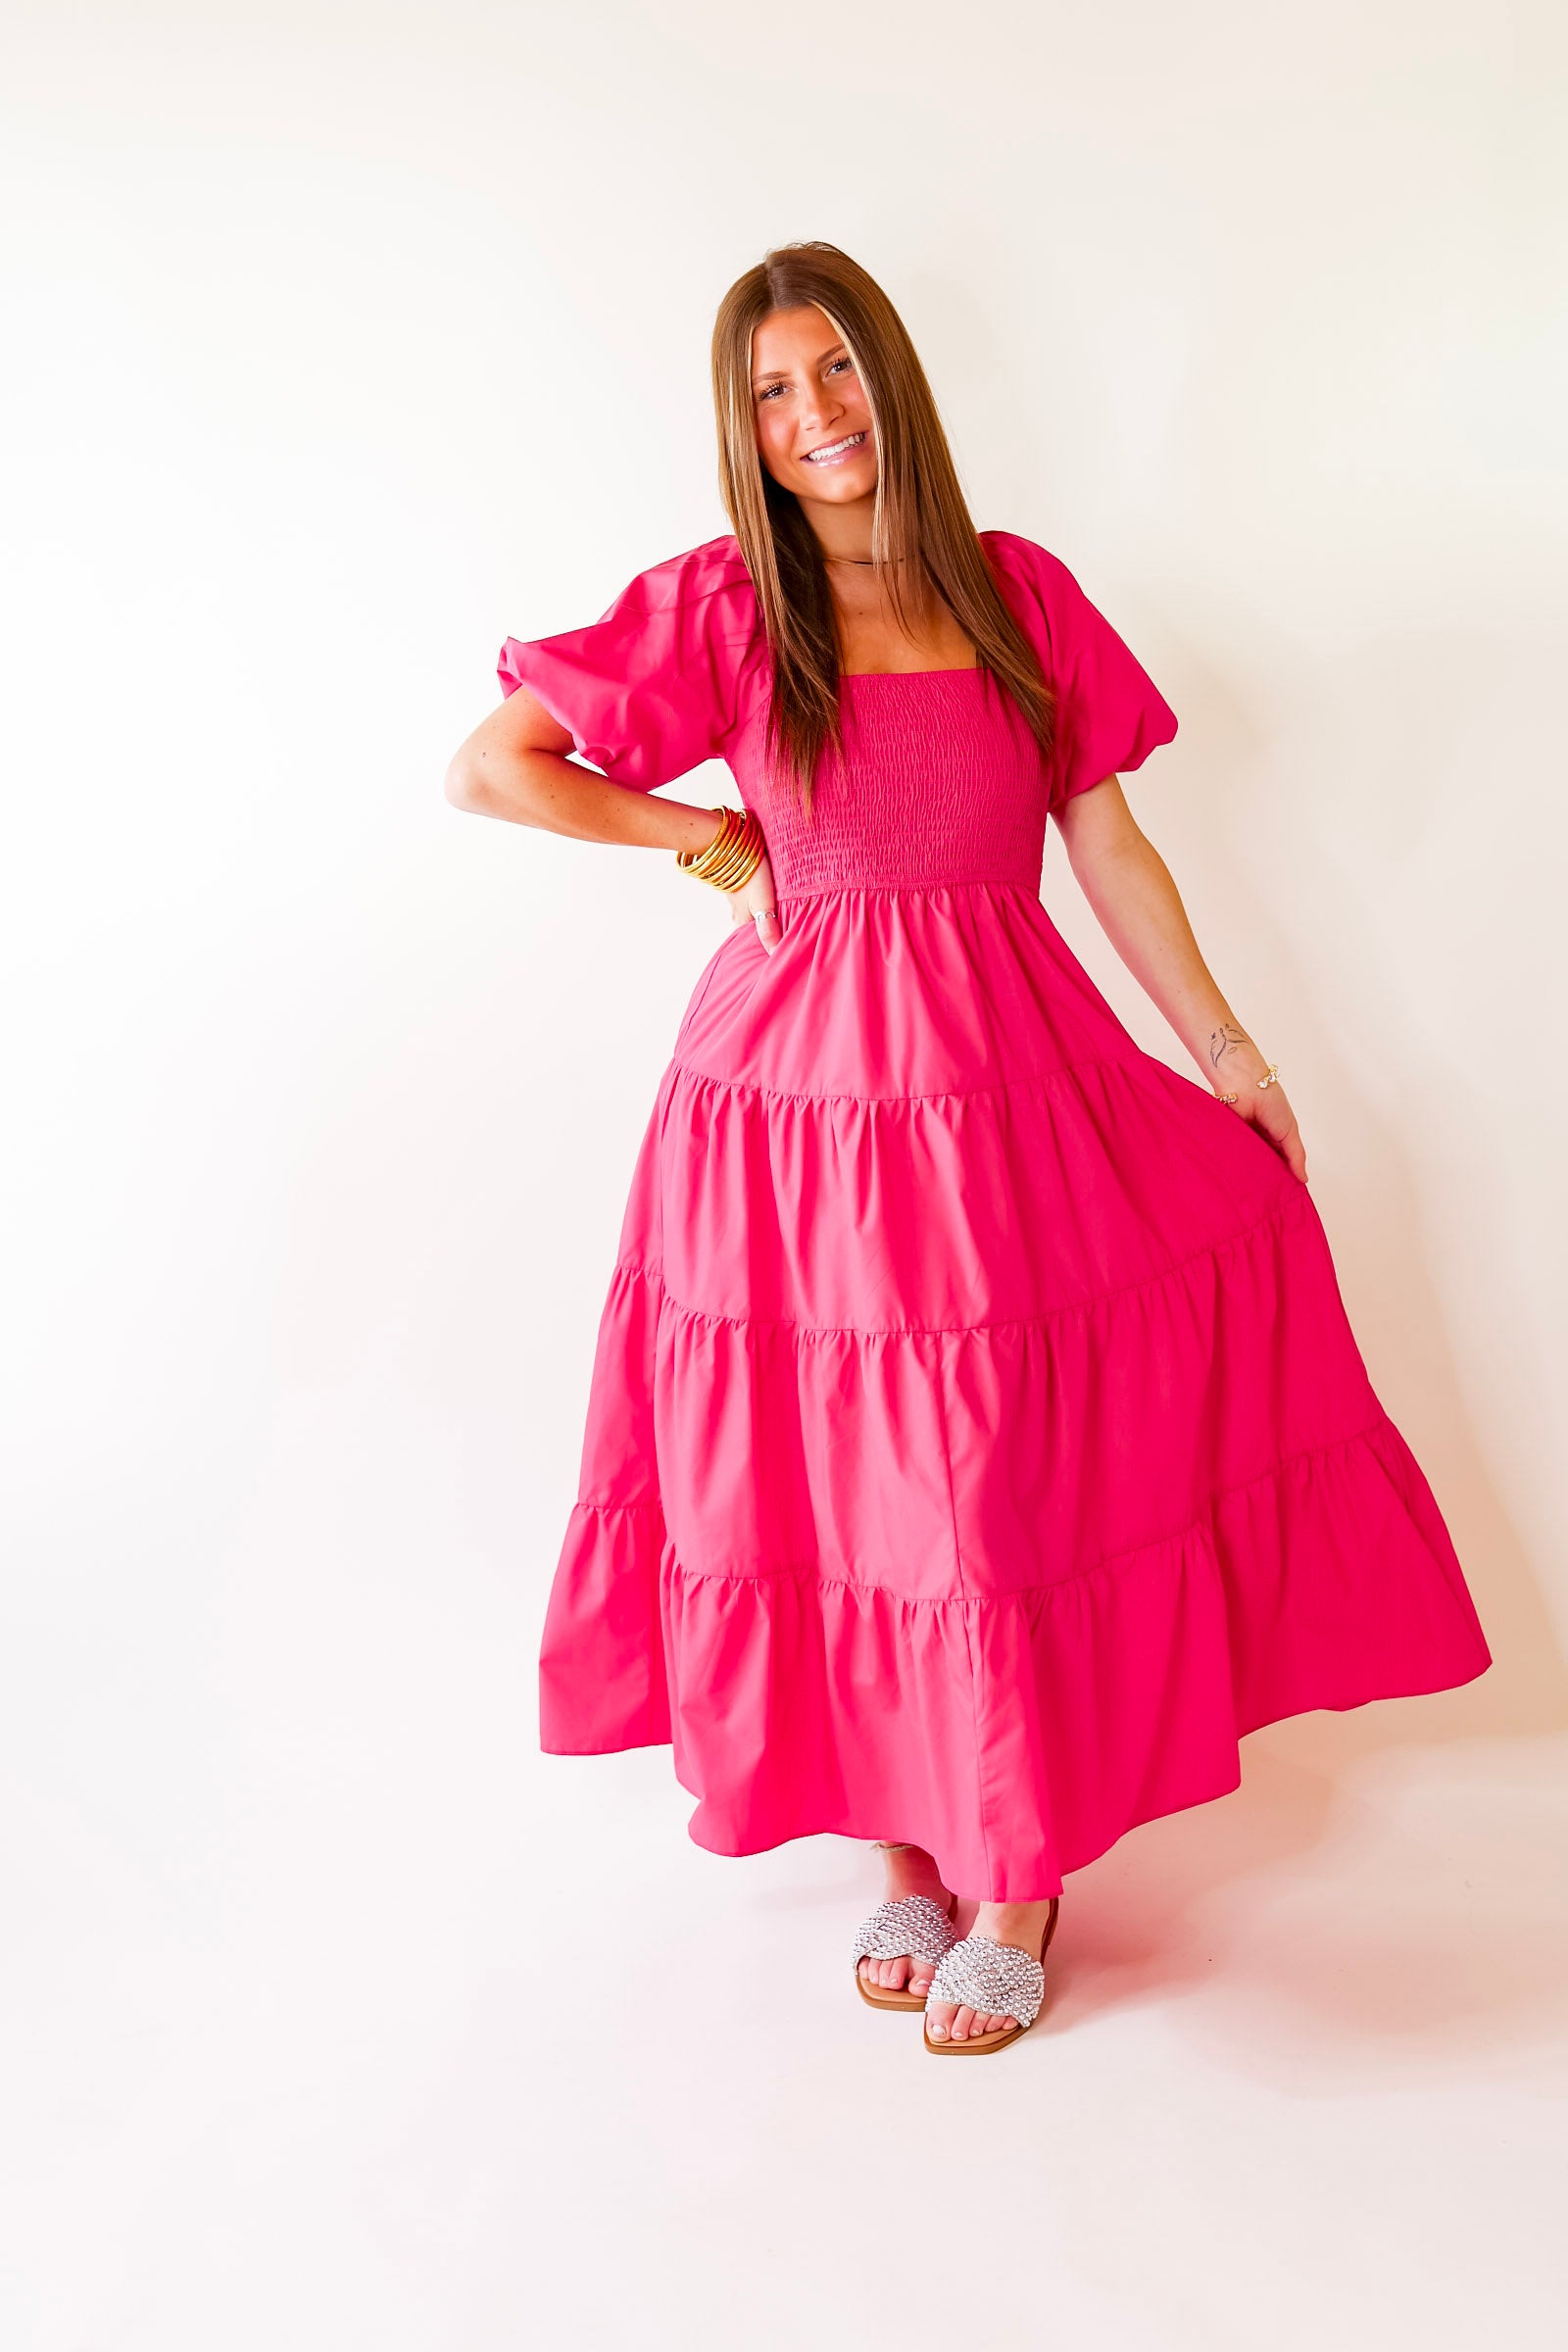 Santorini Sunshine Short Balloon Sleeve Maxi Dress in Fuschia Pink - Giddy Up Glamour Boutique